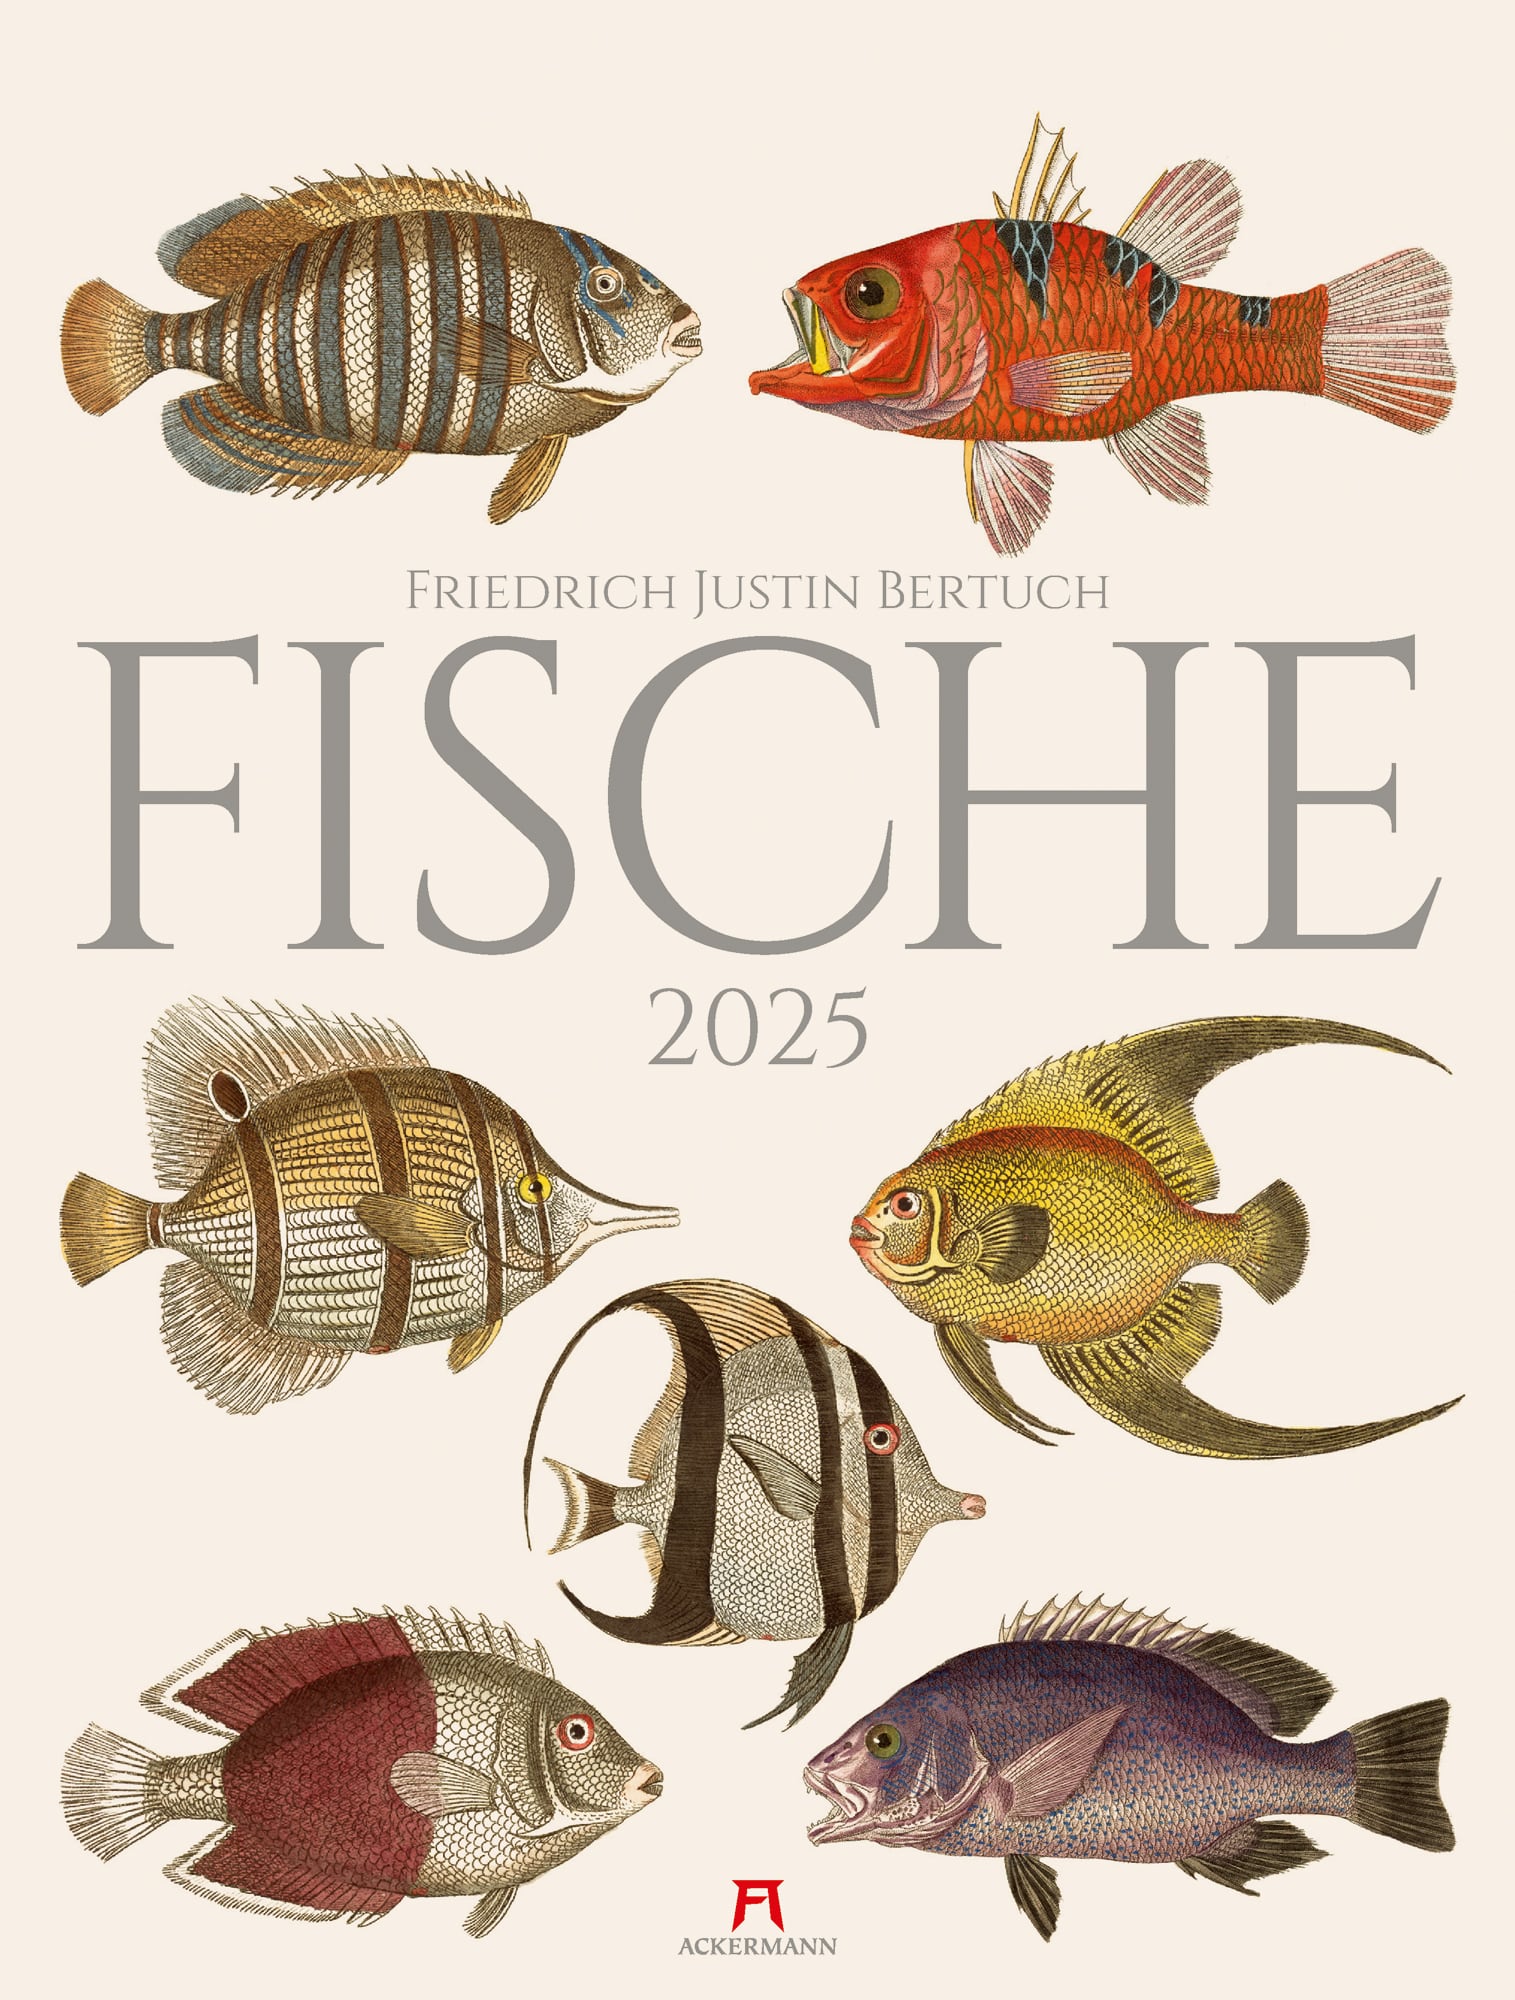 Ackermann Calendar Vintage Fish 2025 - Cover Page